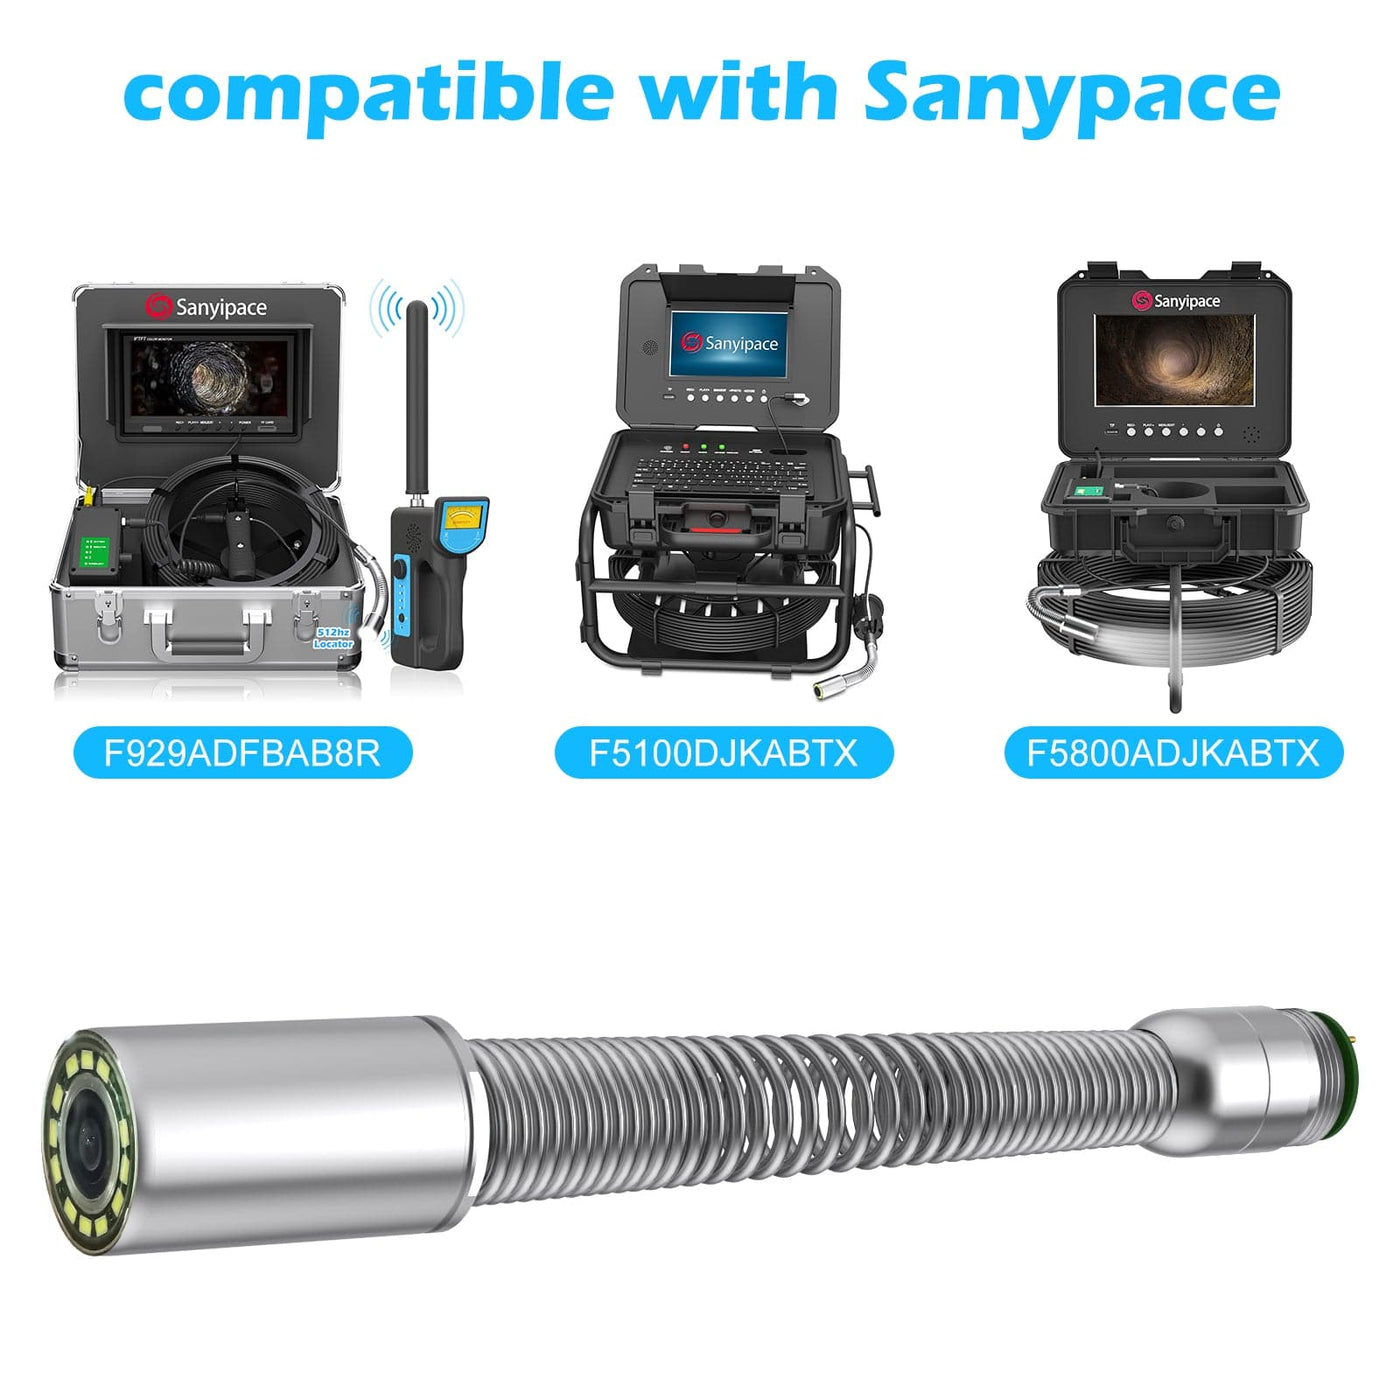 Sanyipace Kameraanschluss für 929ADFB8R, F5100DJKABTX, F5800ADJKABTX, S810ADSMKT, U88